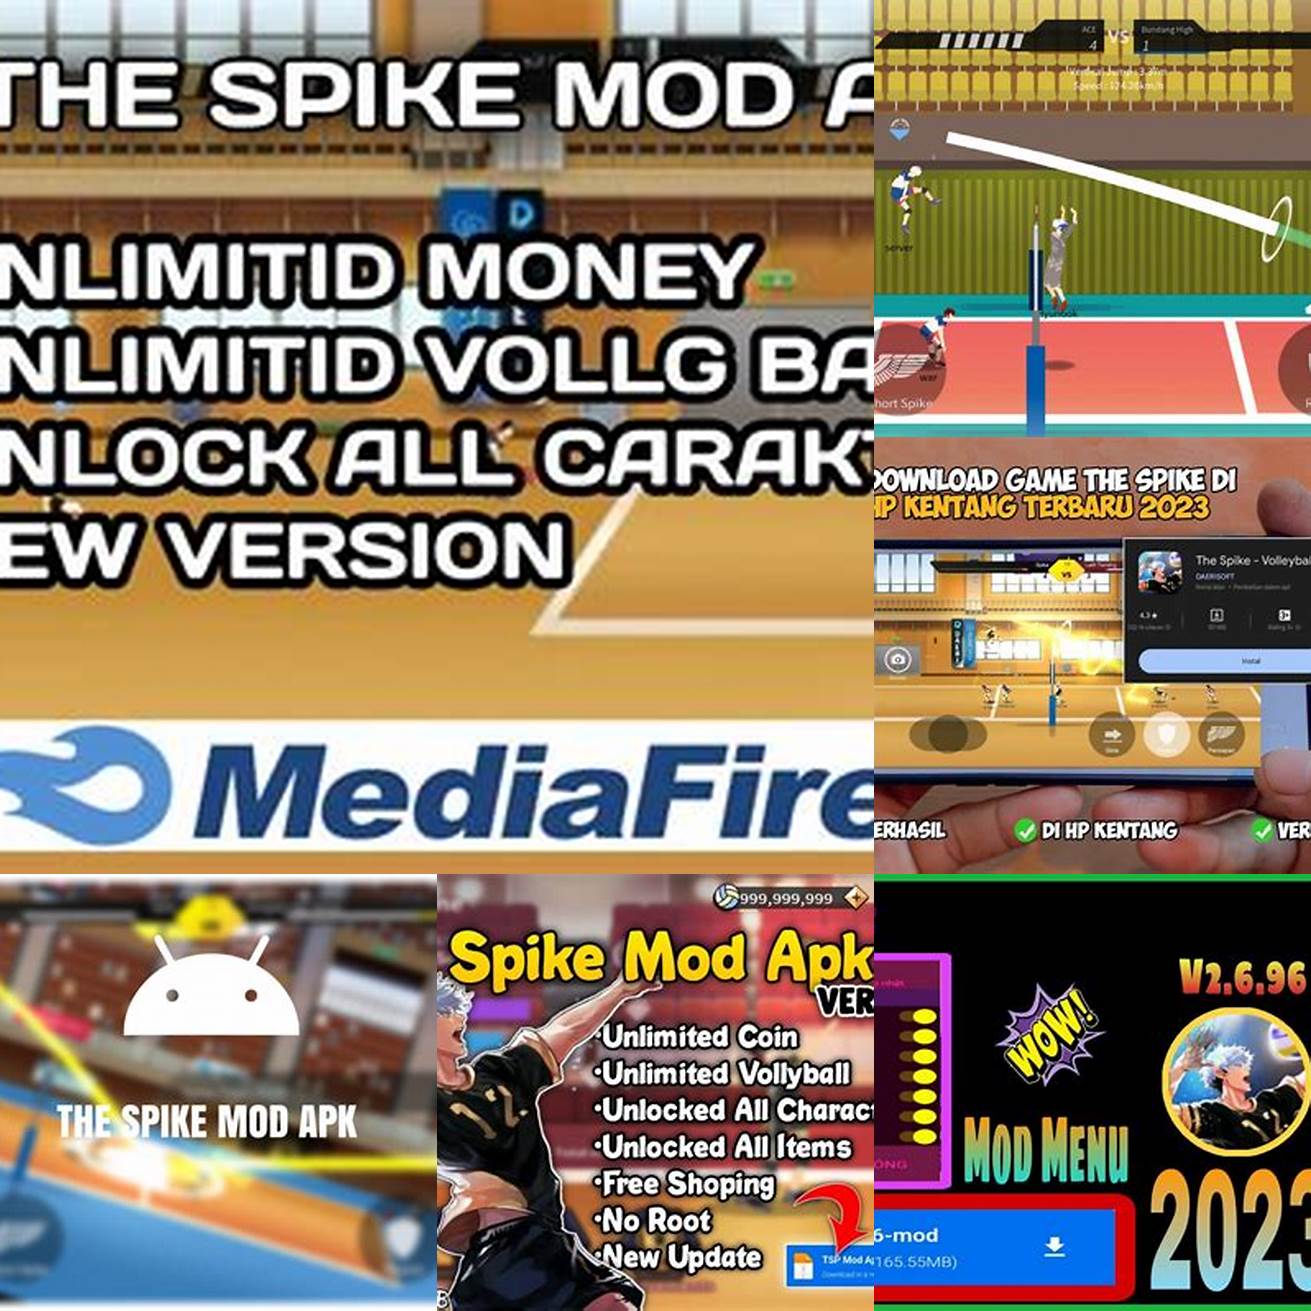 Langkah-langkah untuk mengunduh The Spike Mod Apk 151